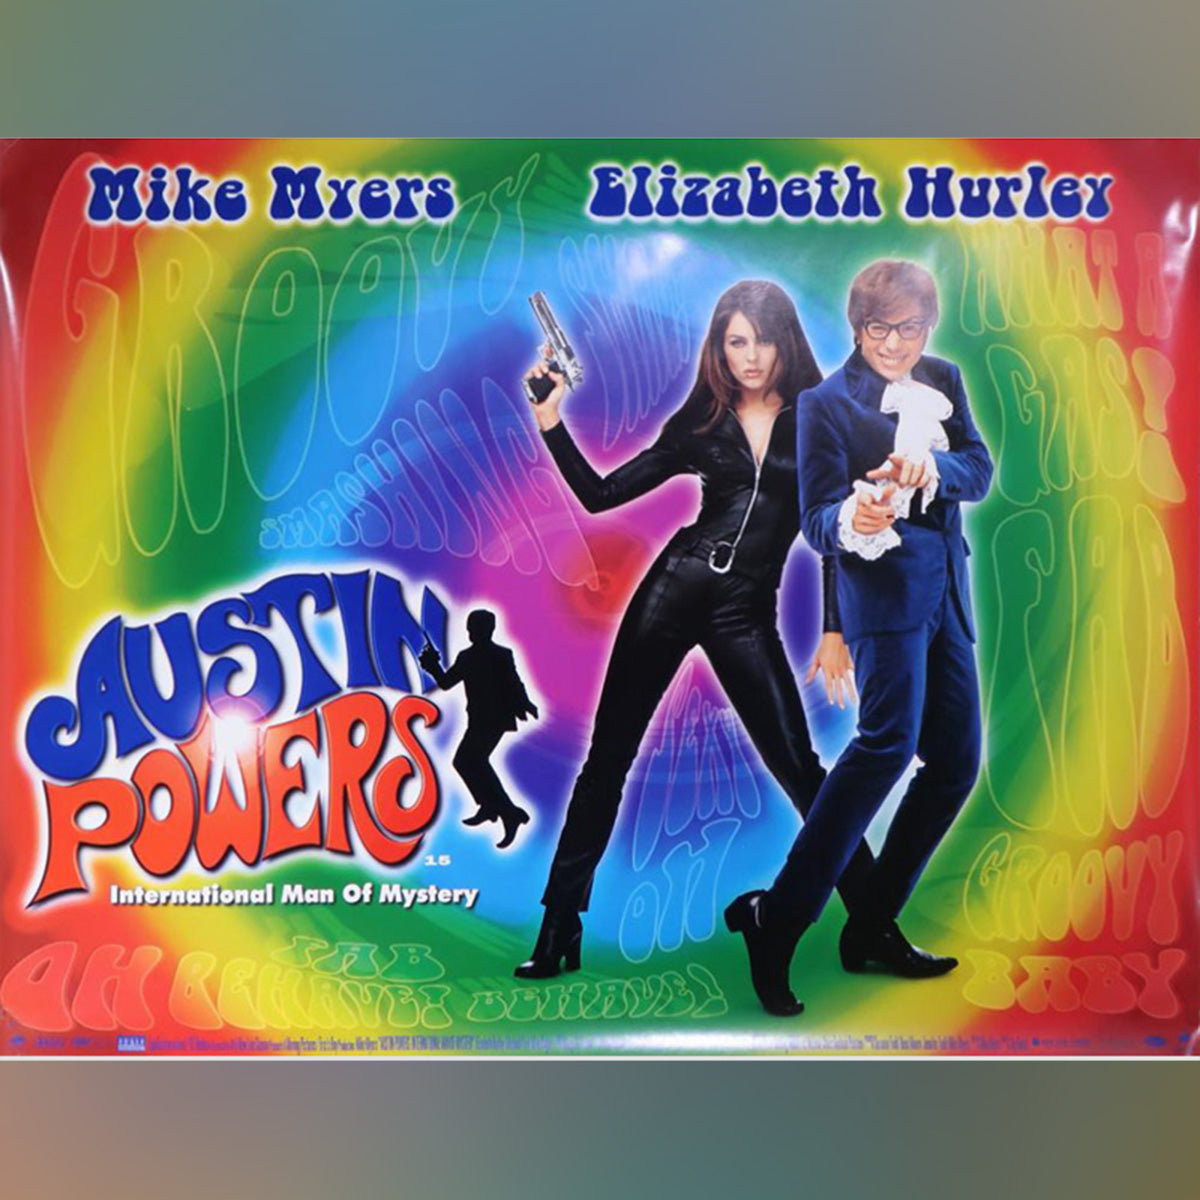 Original Movie Poster of Austin Powers: International Man Of Mystery (1997)